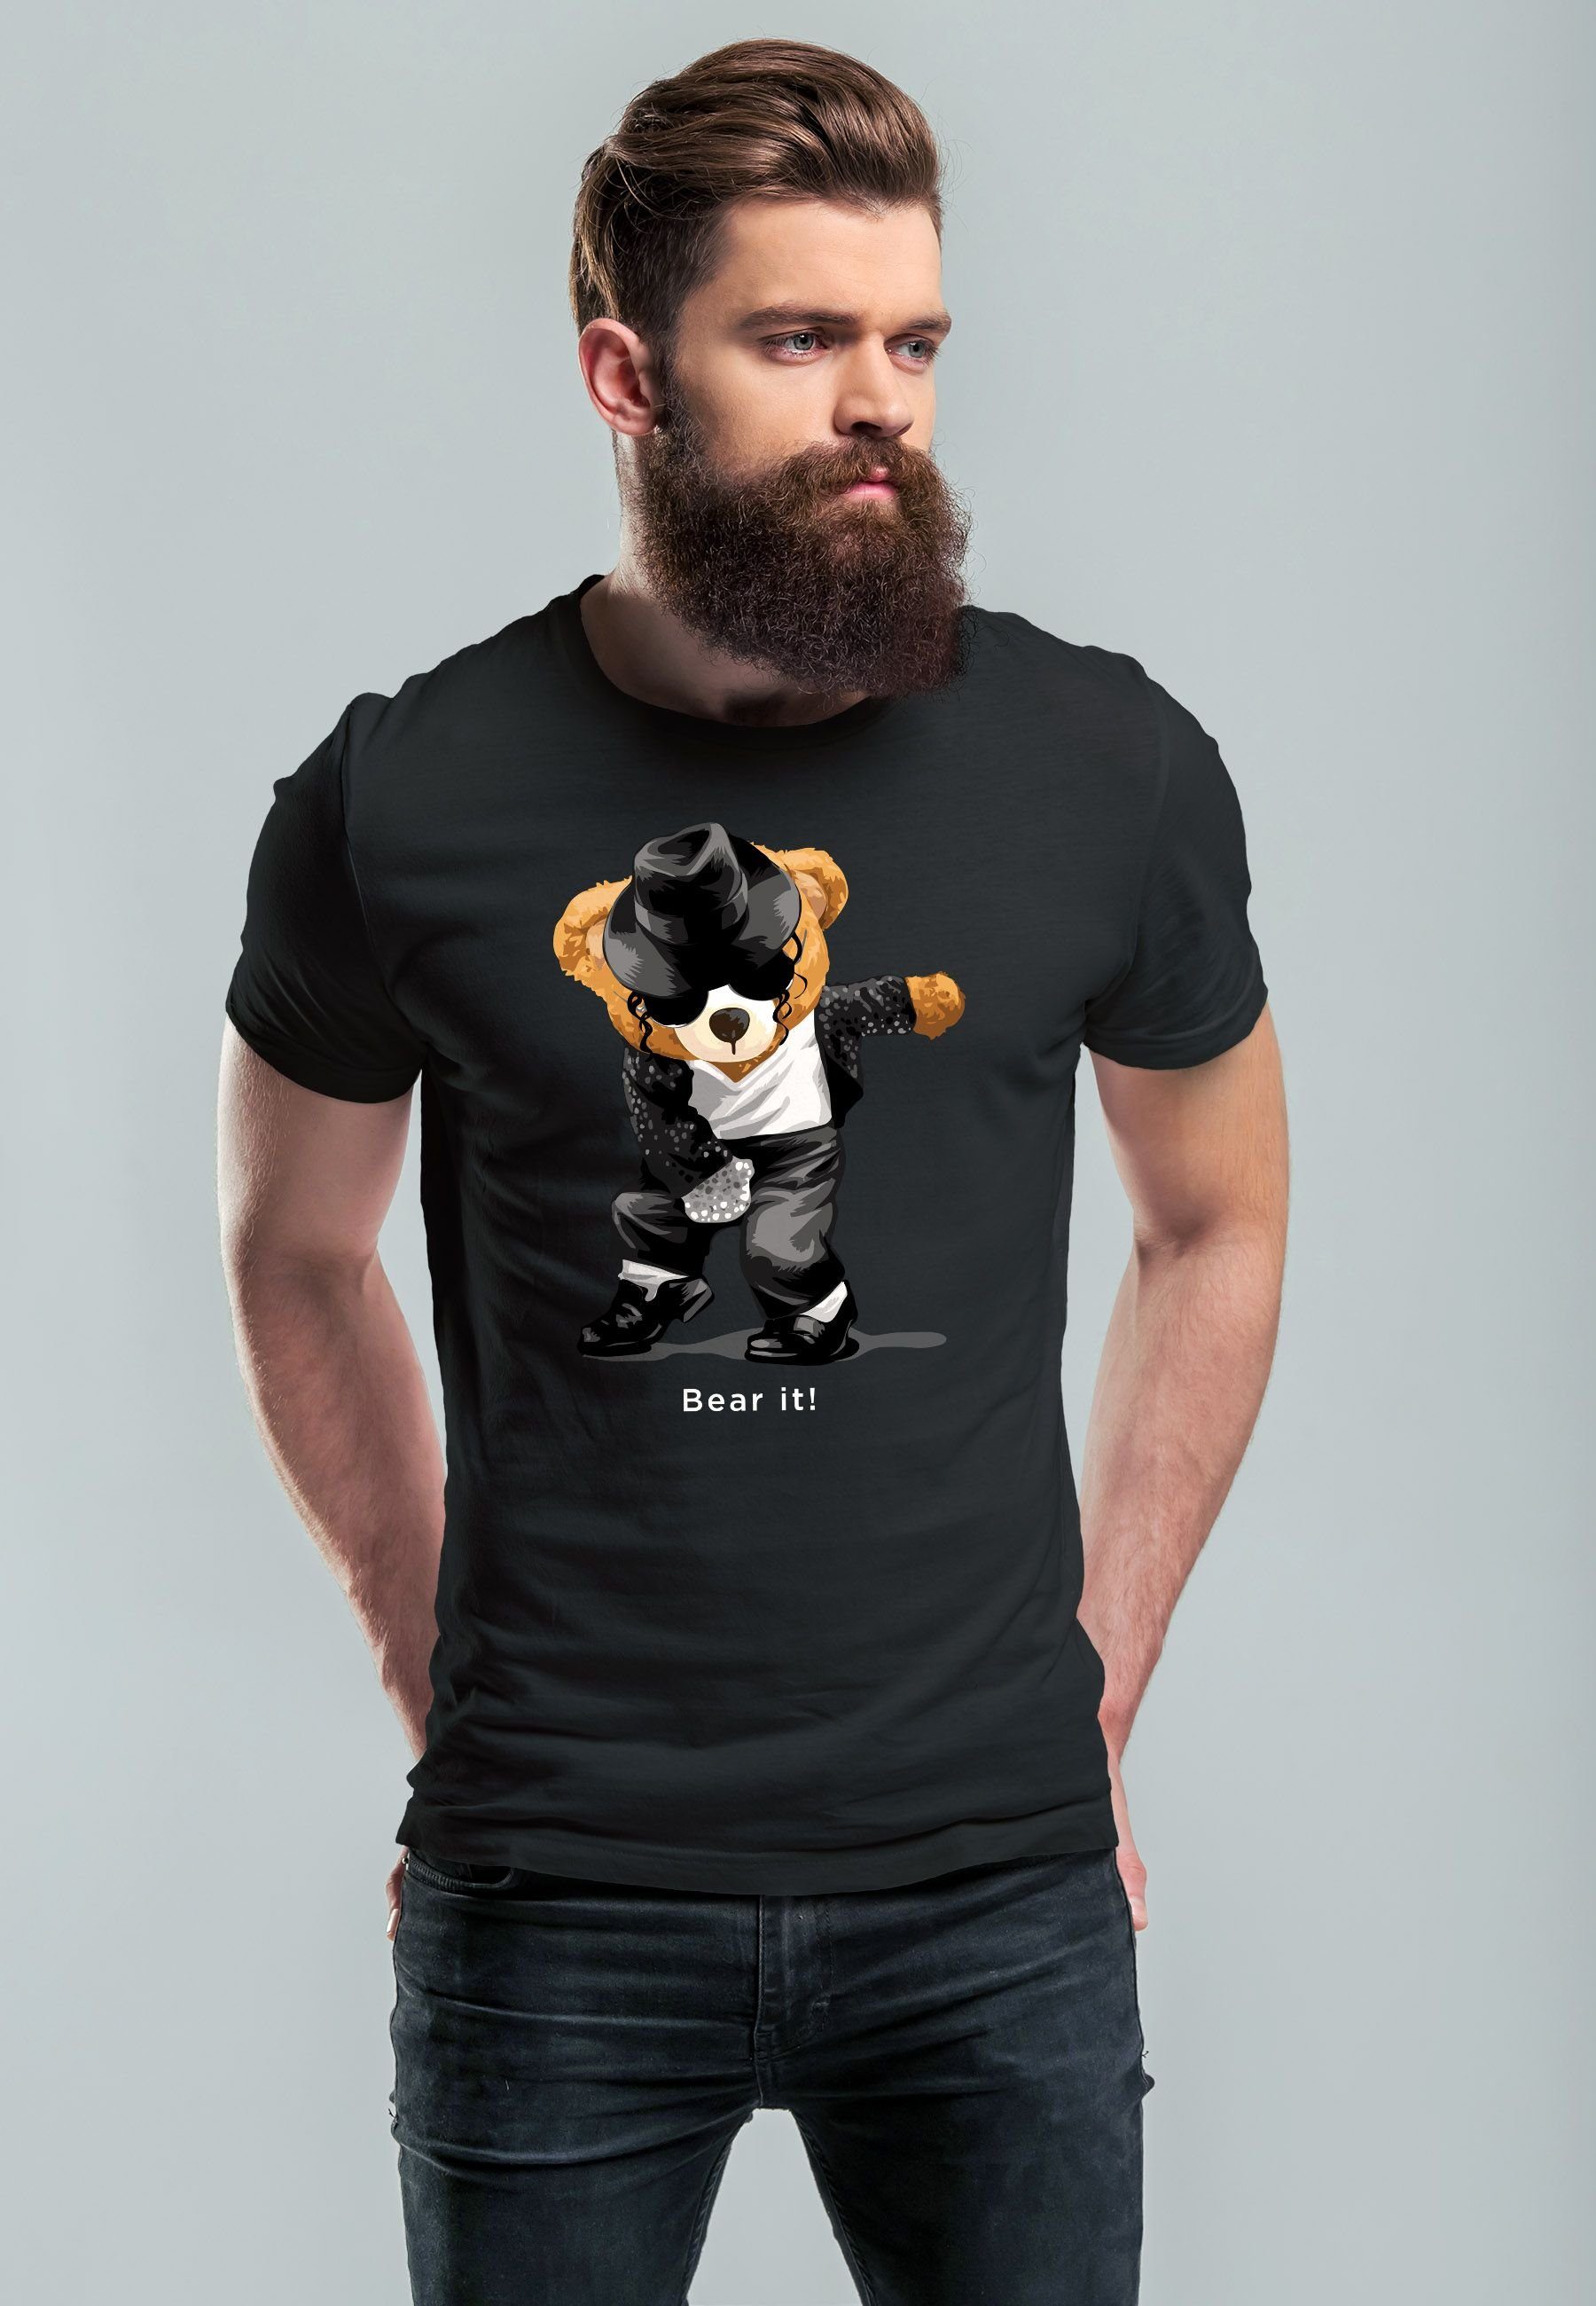 mit Jackson Print Teddy Bear schwarz Auf Musik Print-Shirt Bear Bär it! Print Herren T-Shirt Parodie Neverless